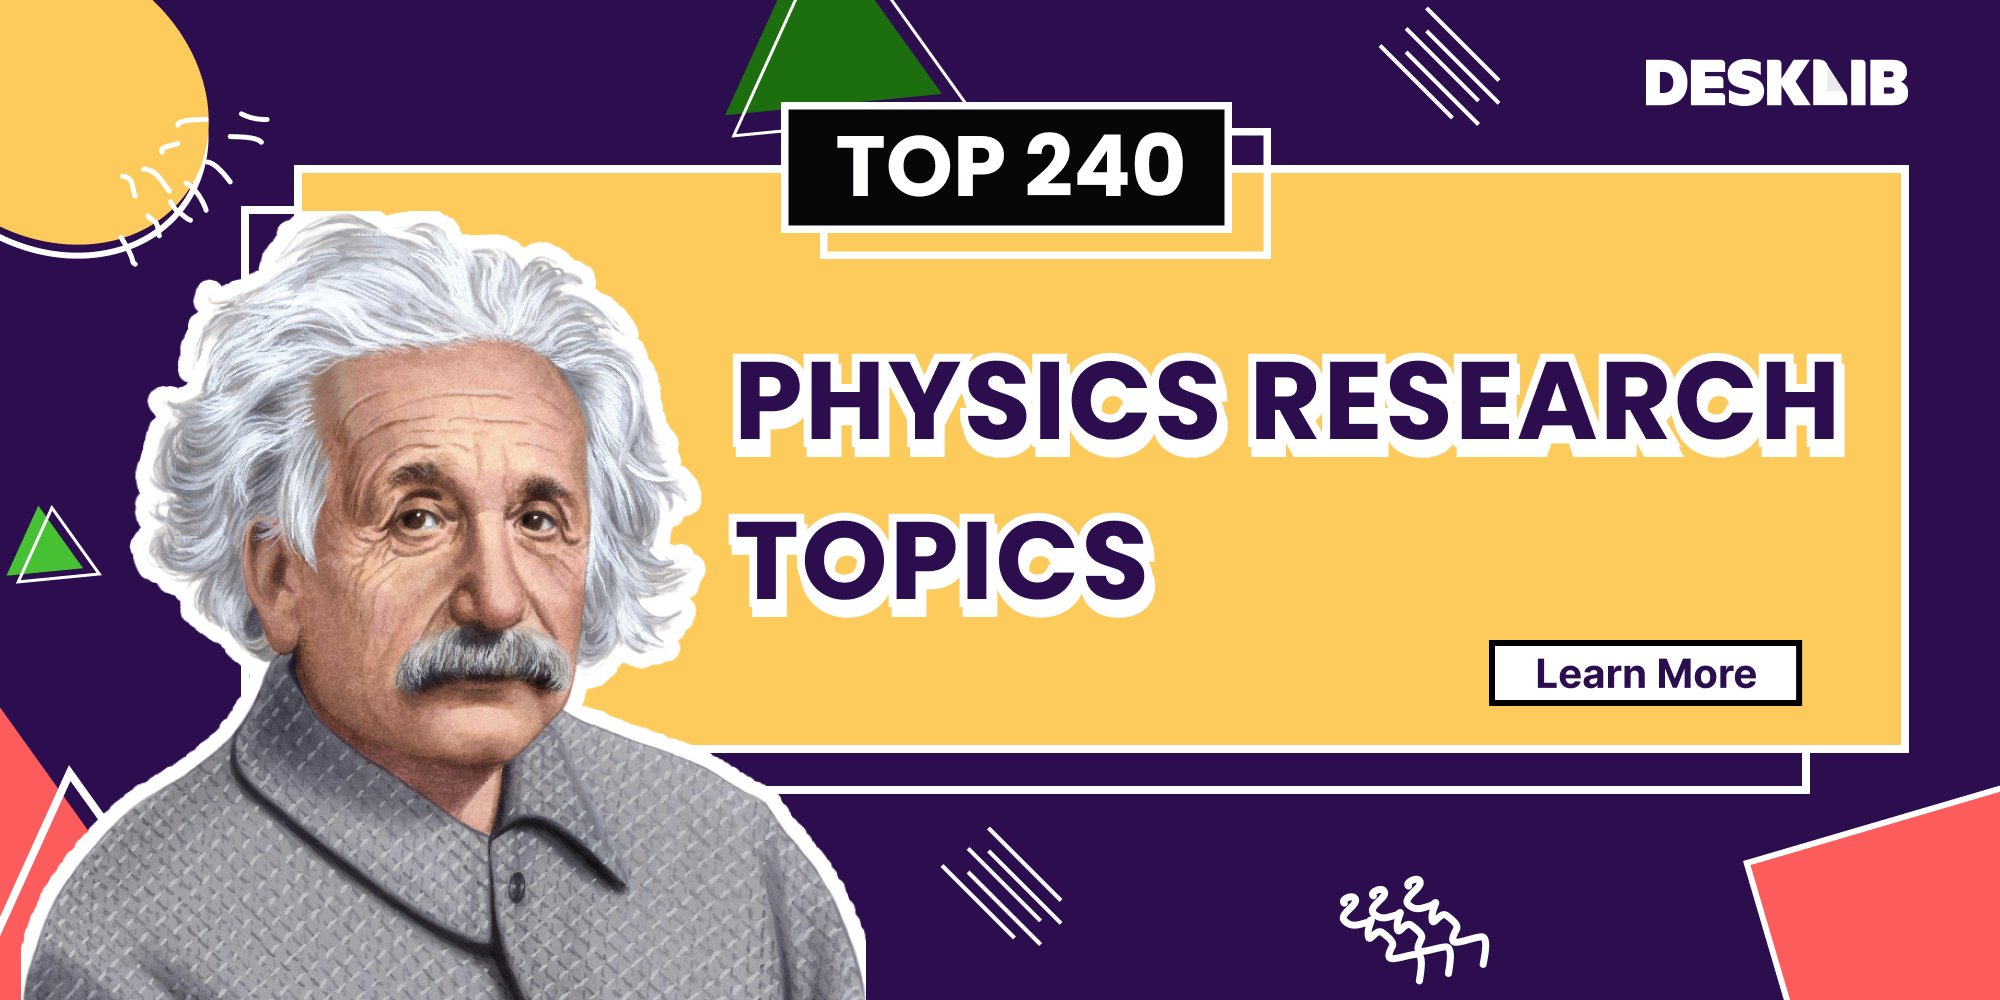 phd physics research topics